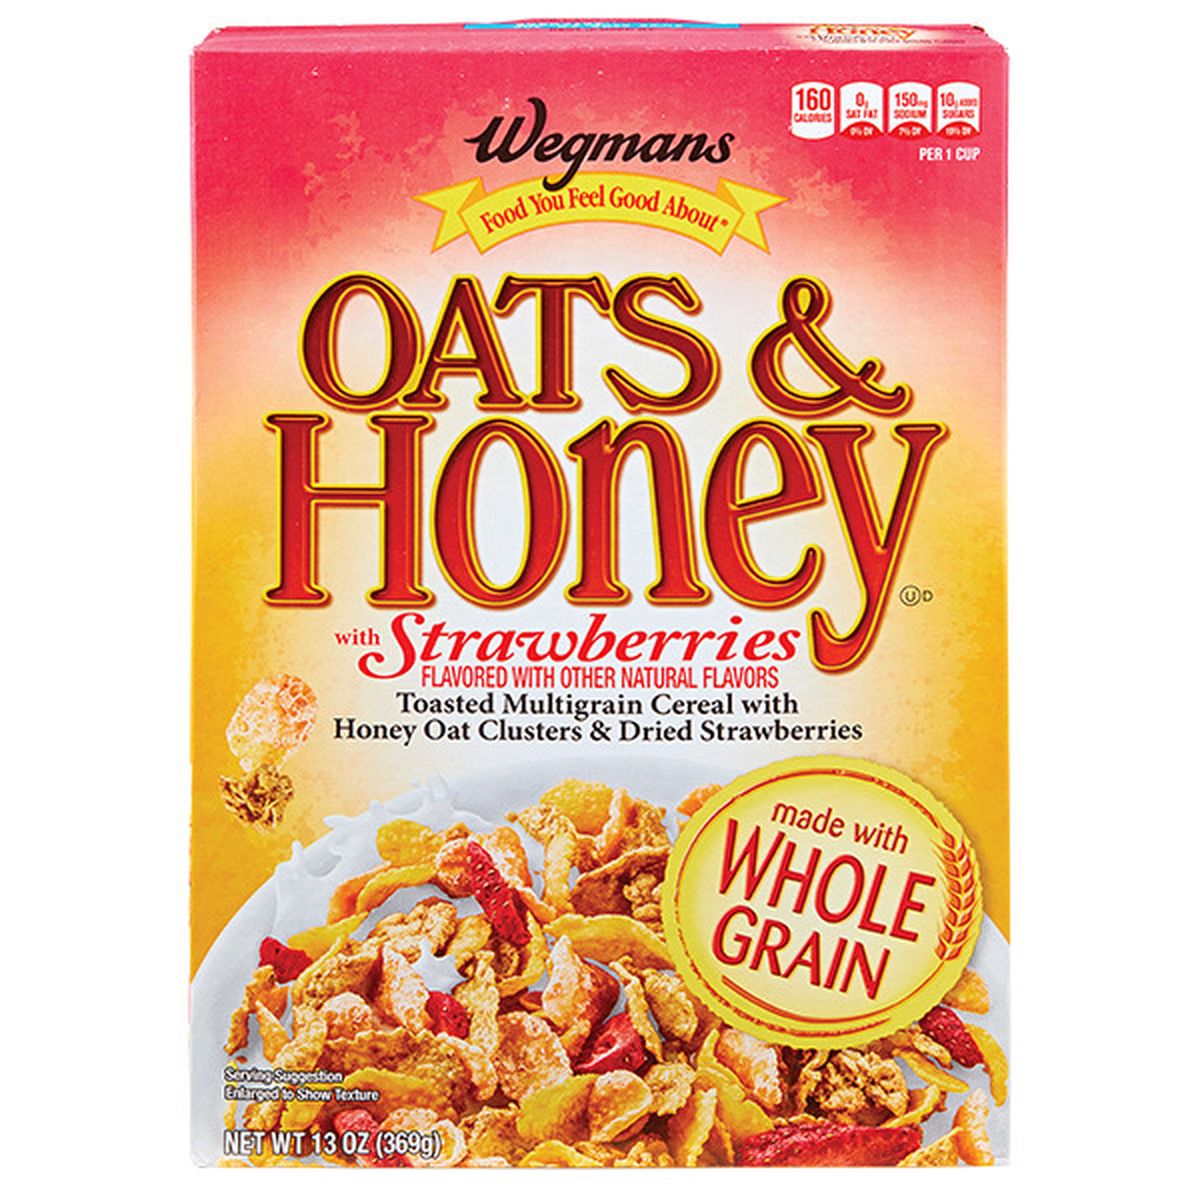 Calories in Wegmans Oats & Honey with Strawberries Cereal